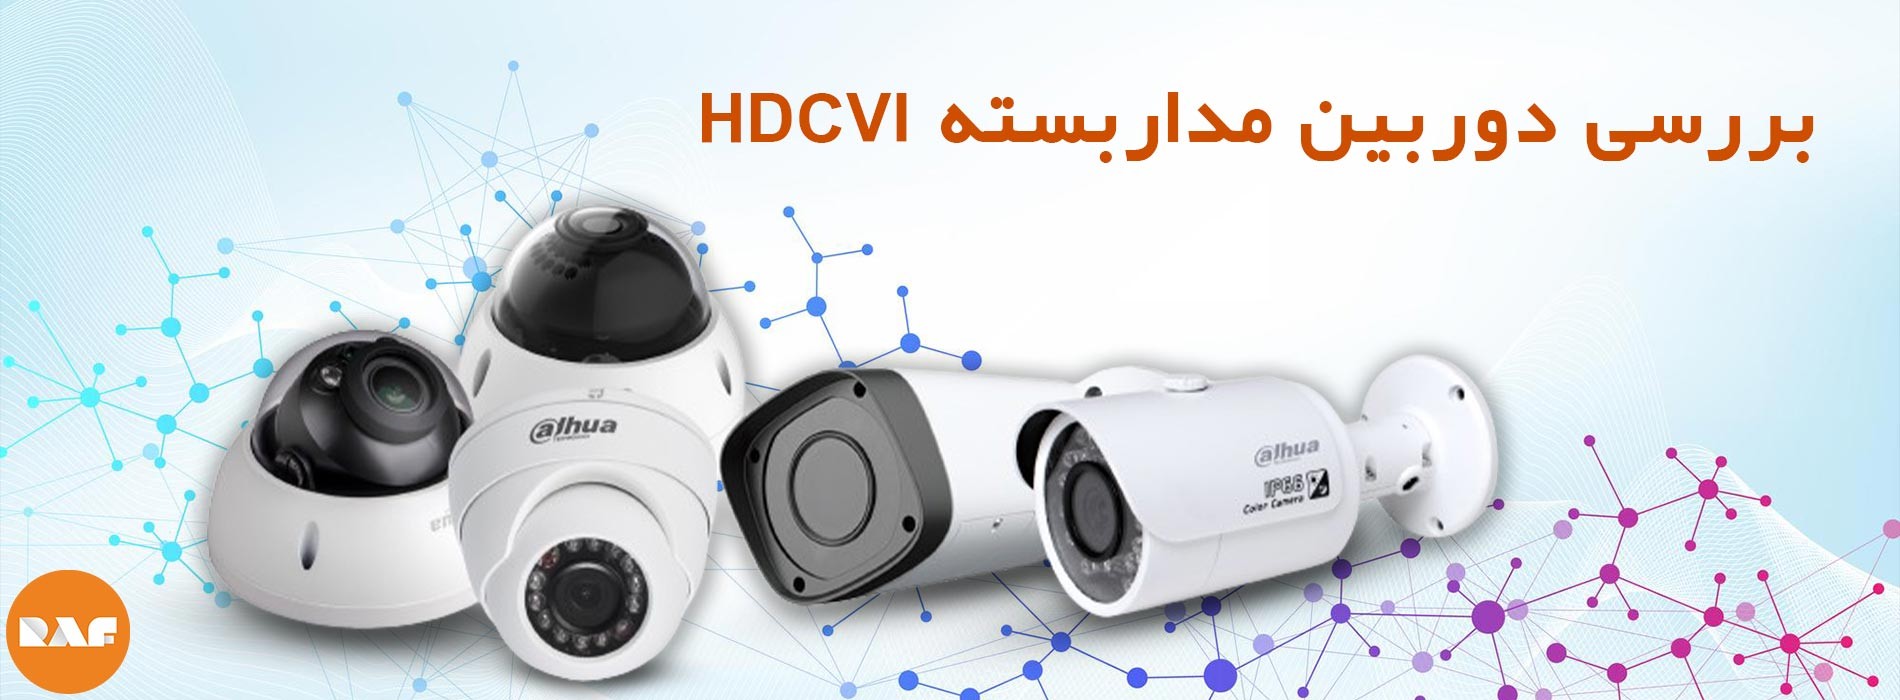 دوربین مداربسته HDCVI